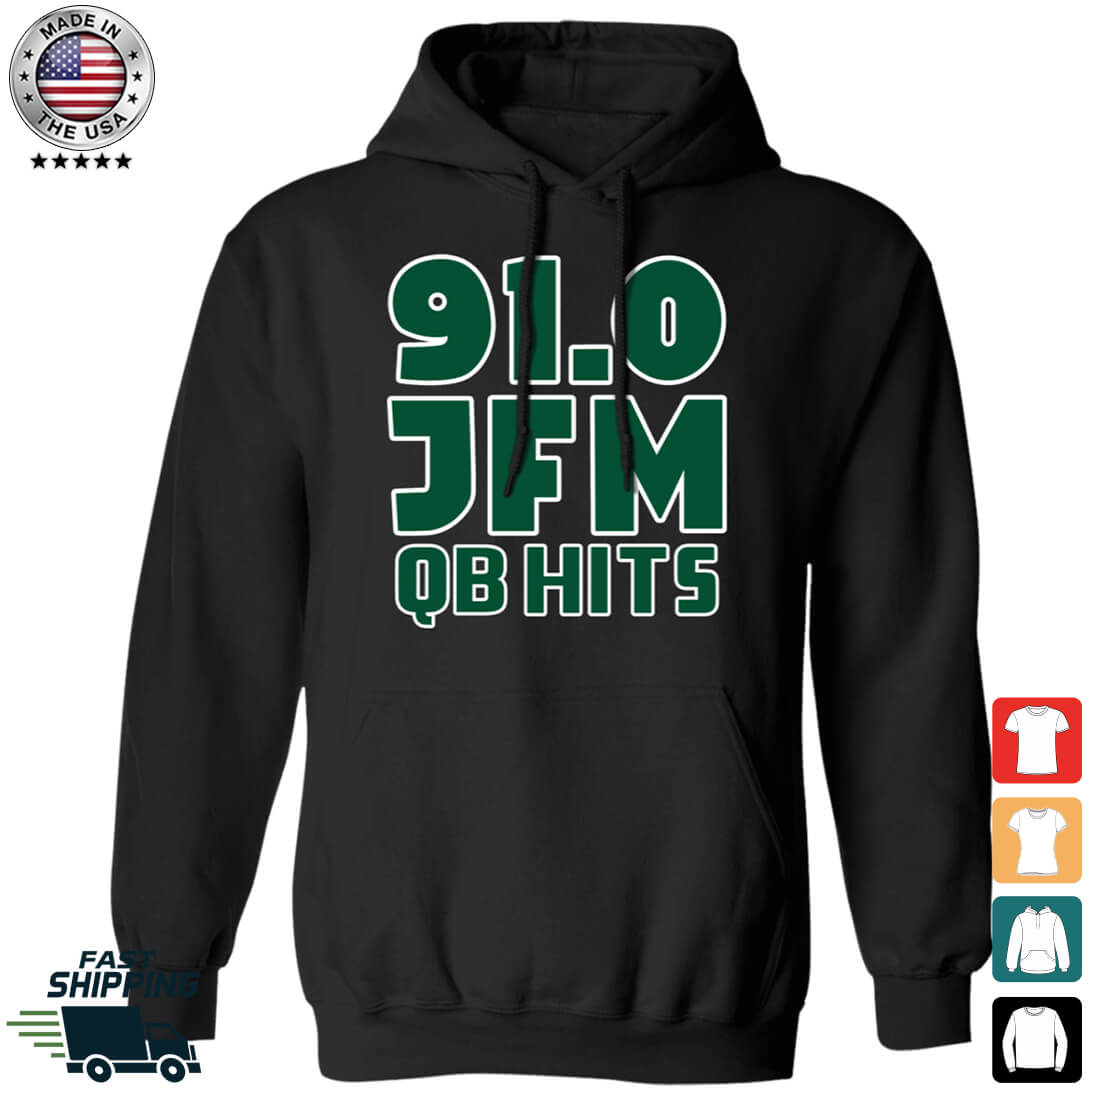 91.0 JFM QB Hist Hoodie